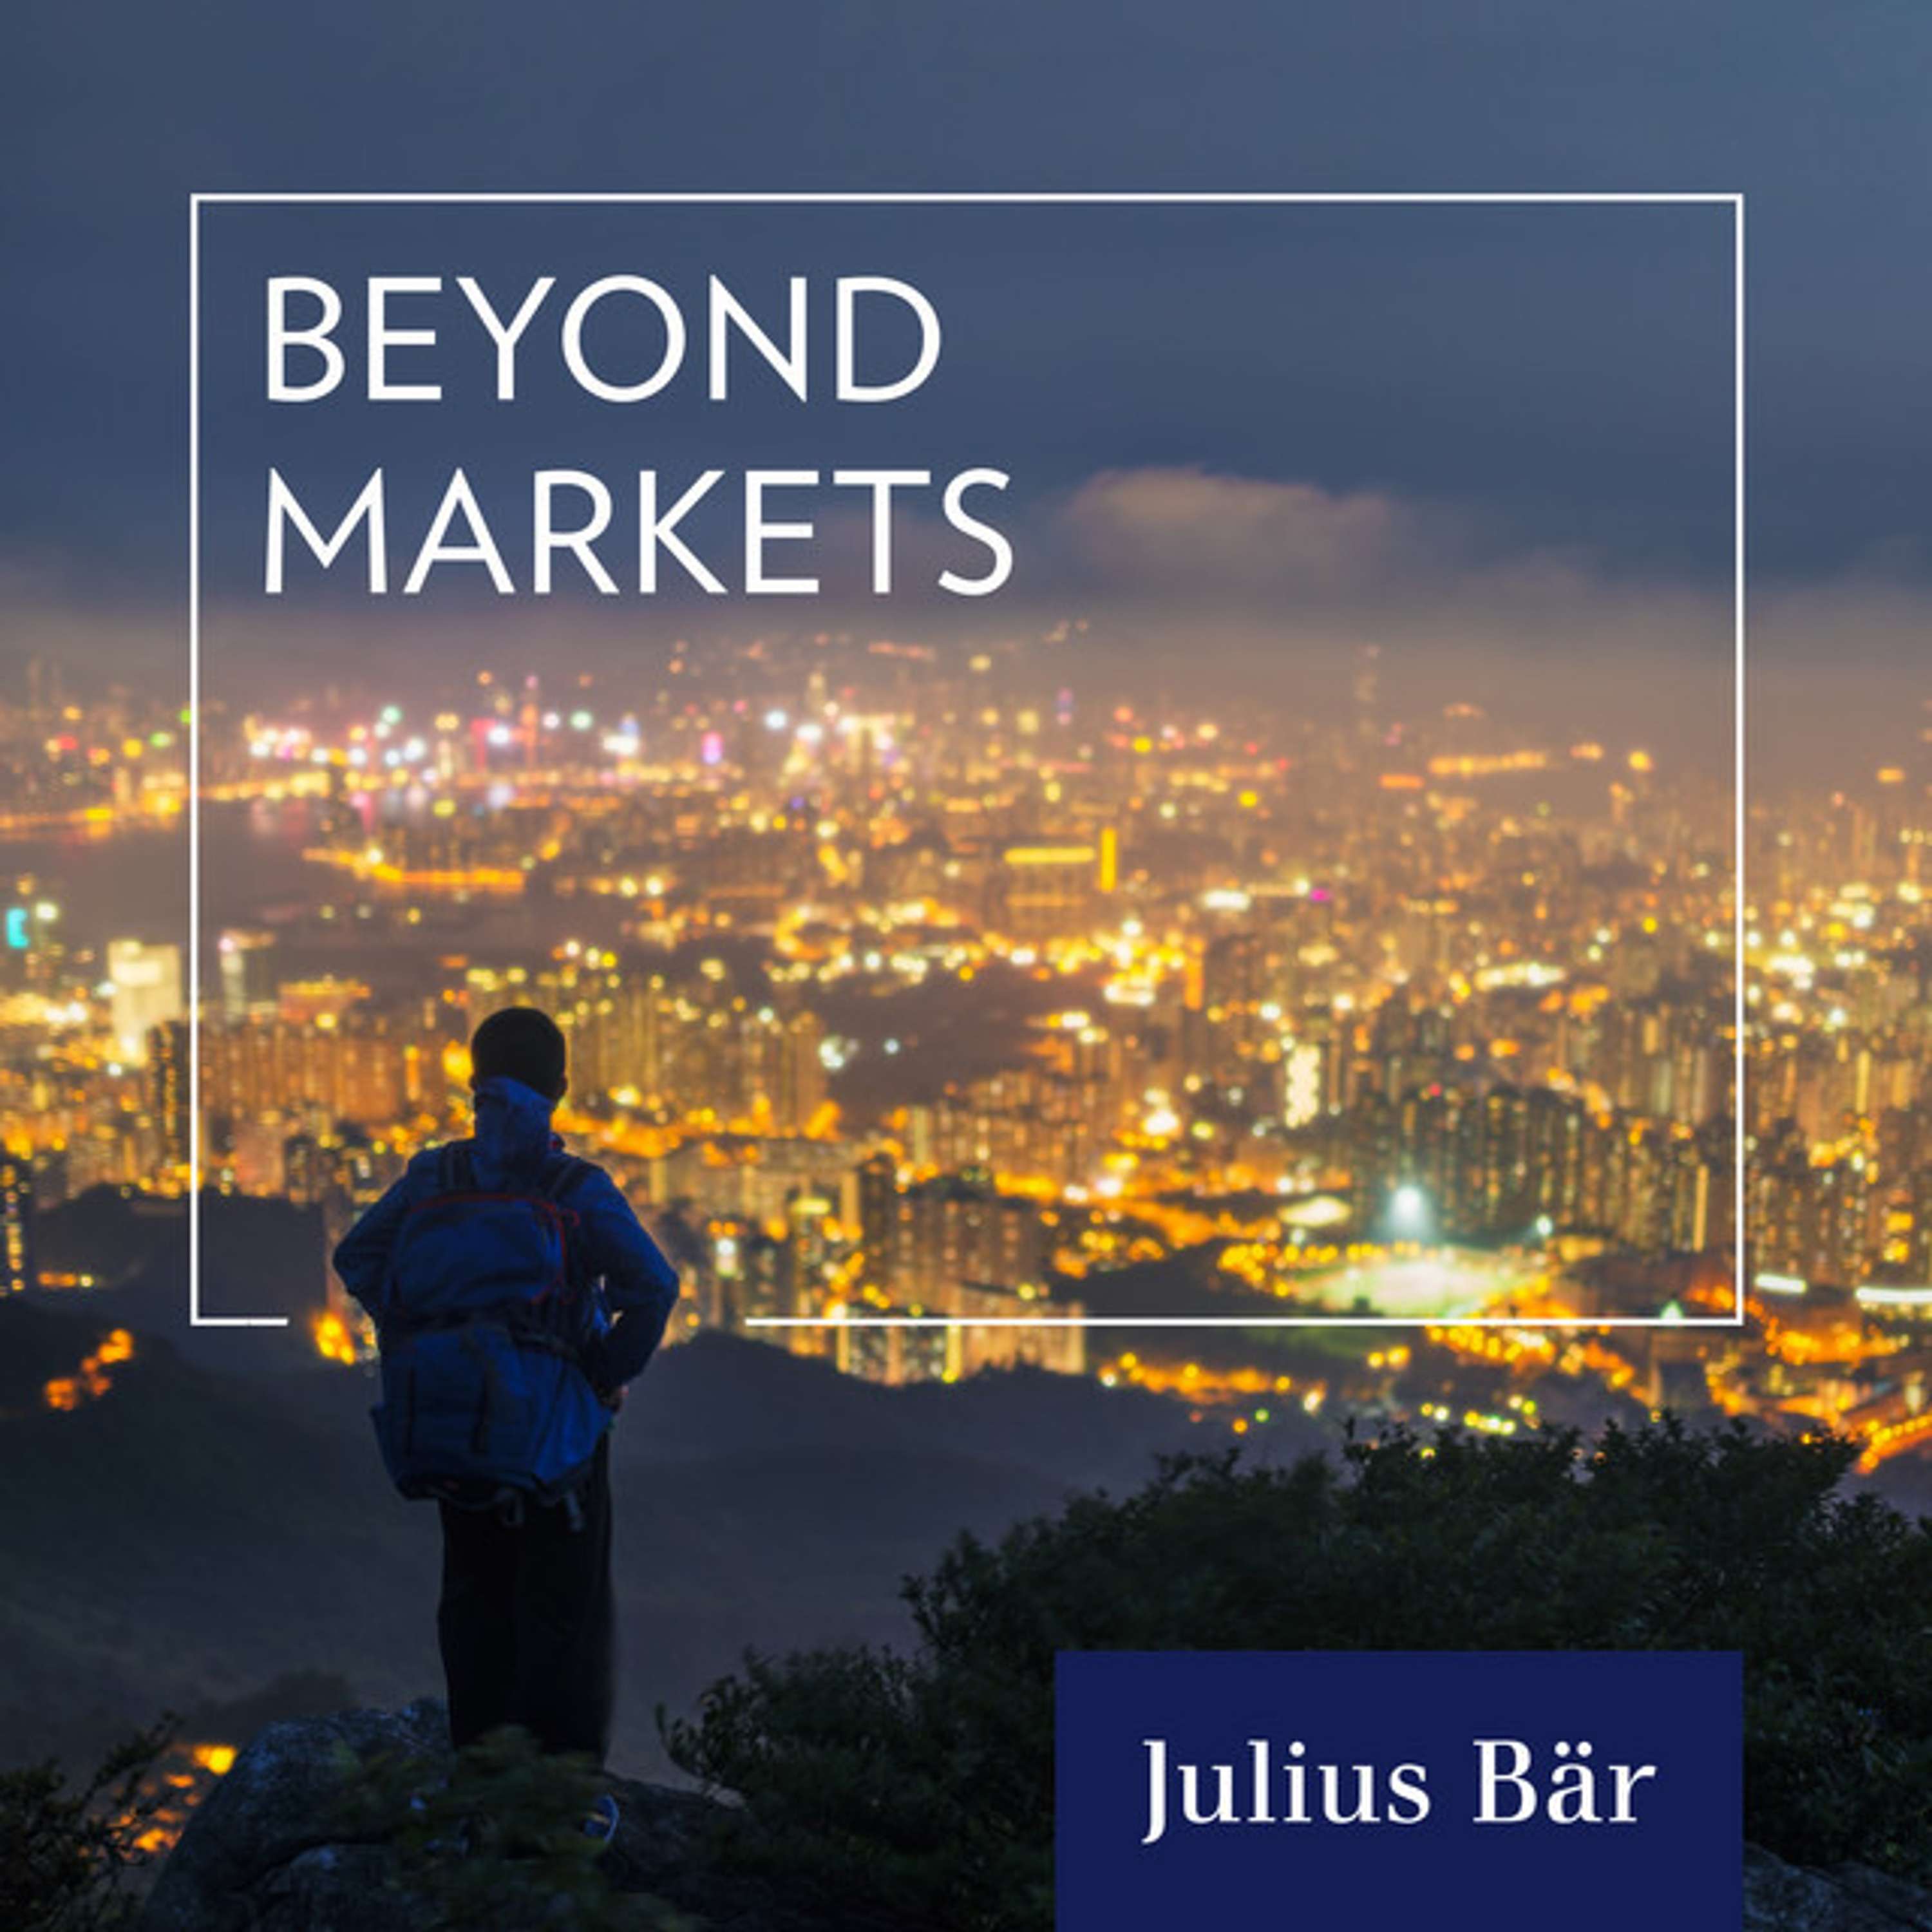 Beyond Markets podcast